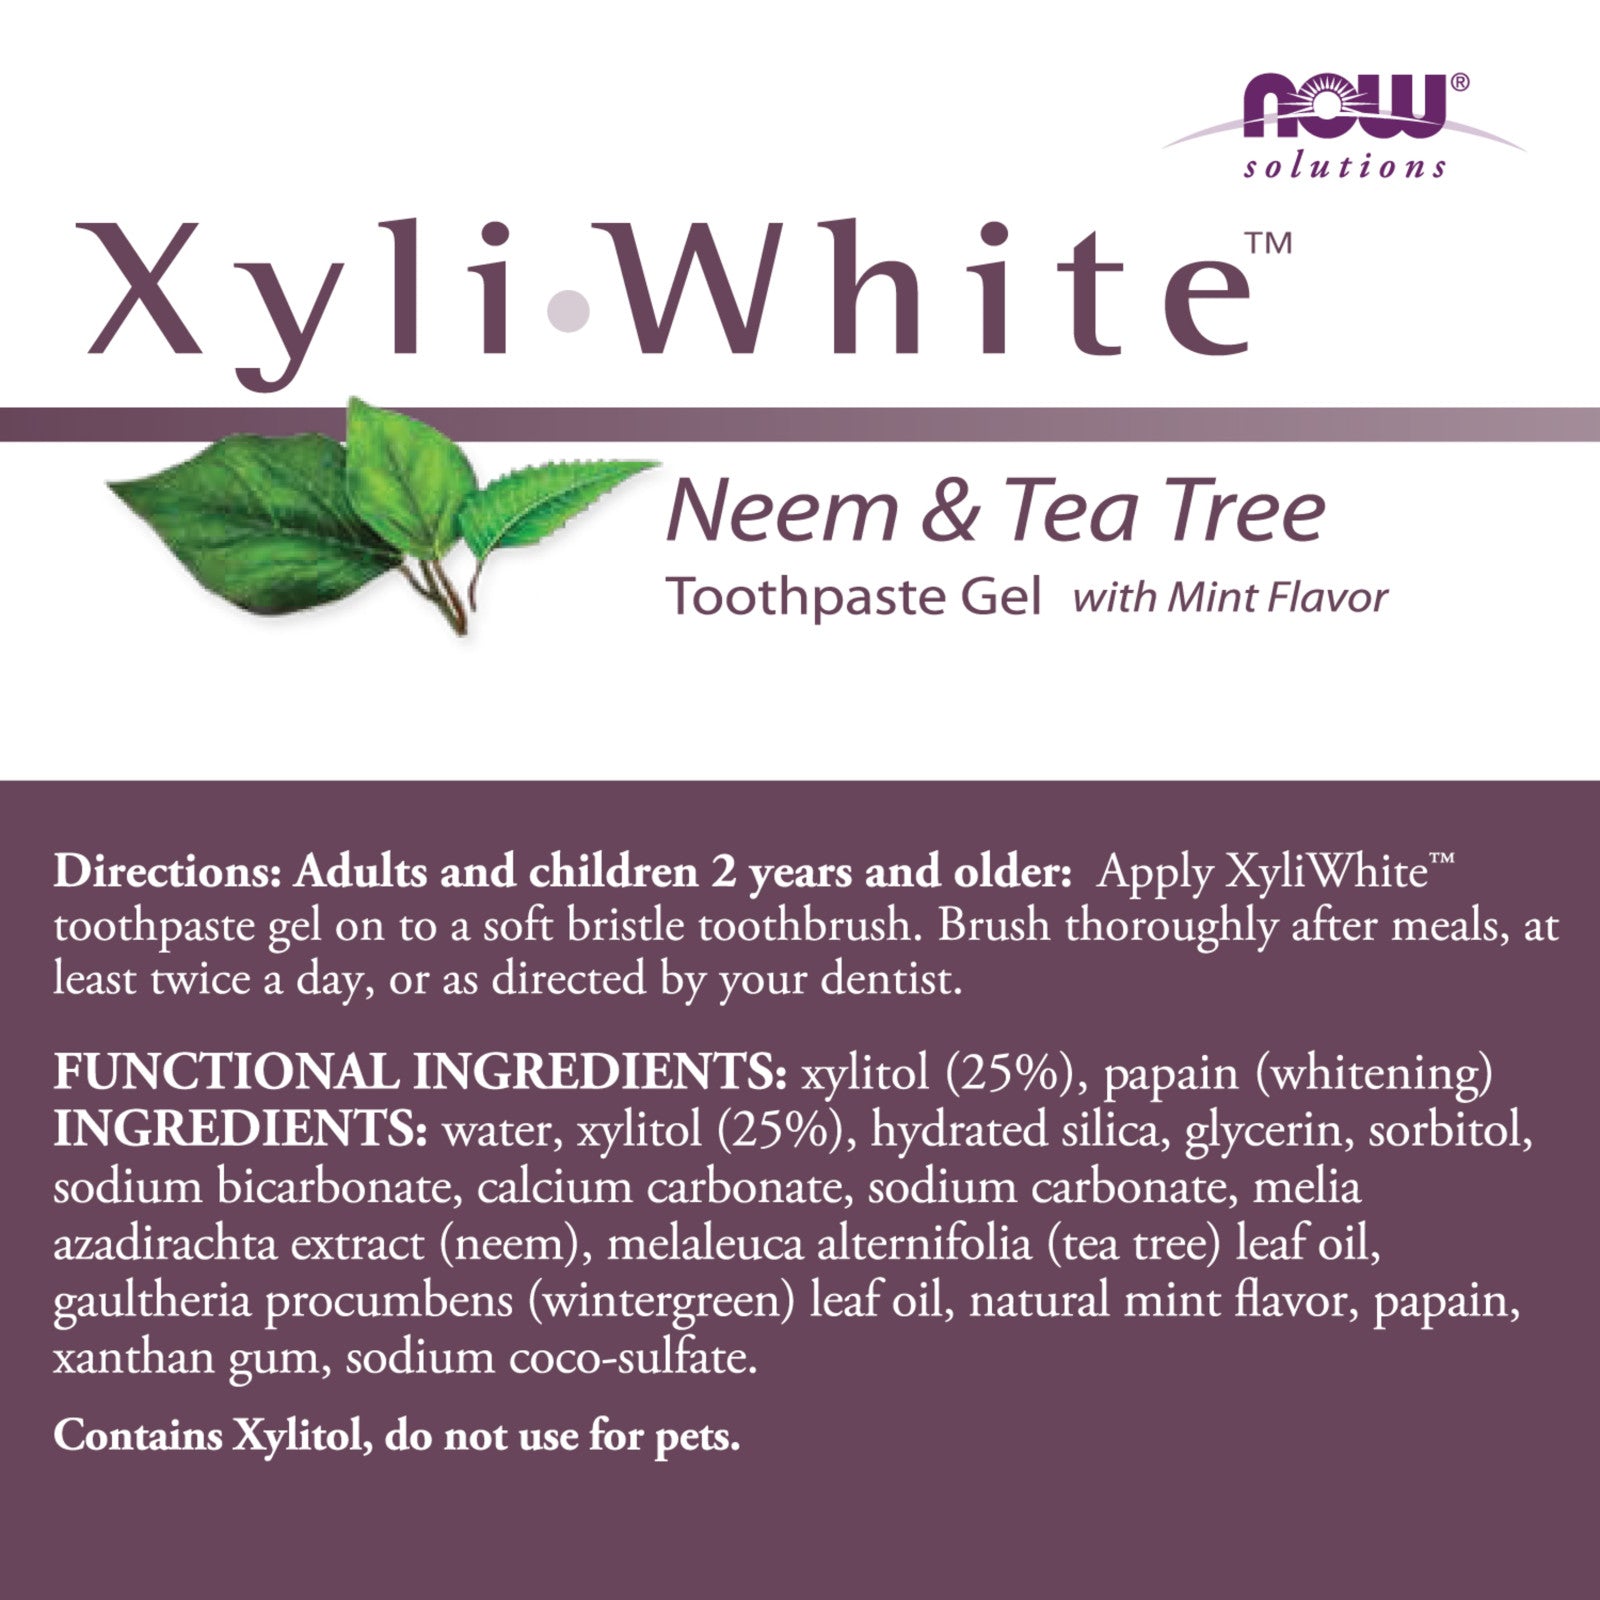 NOW Foods Xyliwhite Neem & Tea Tree Toothpaste Gel 6.4 oz